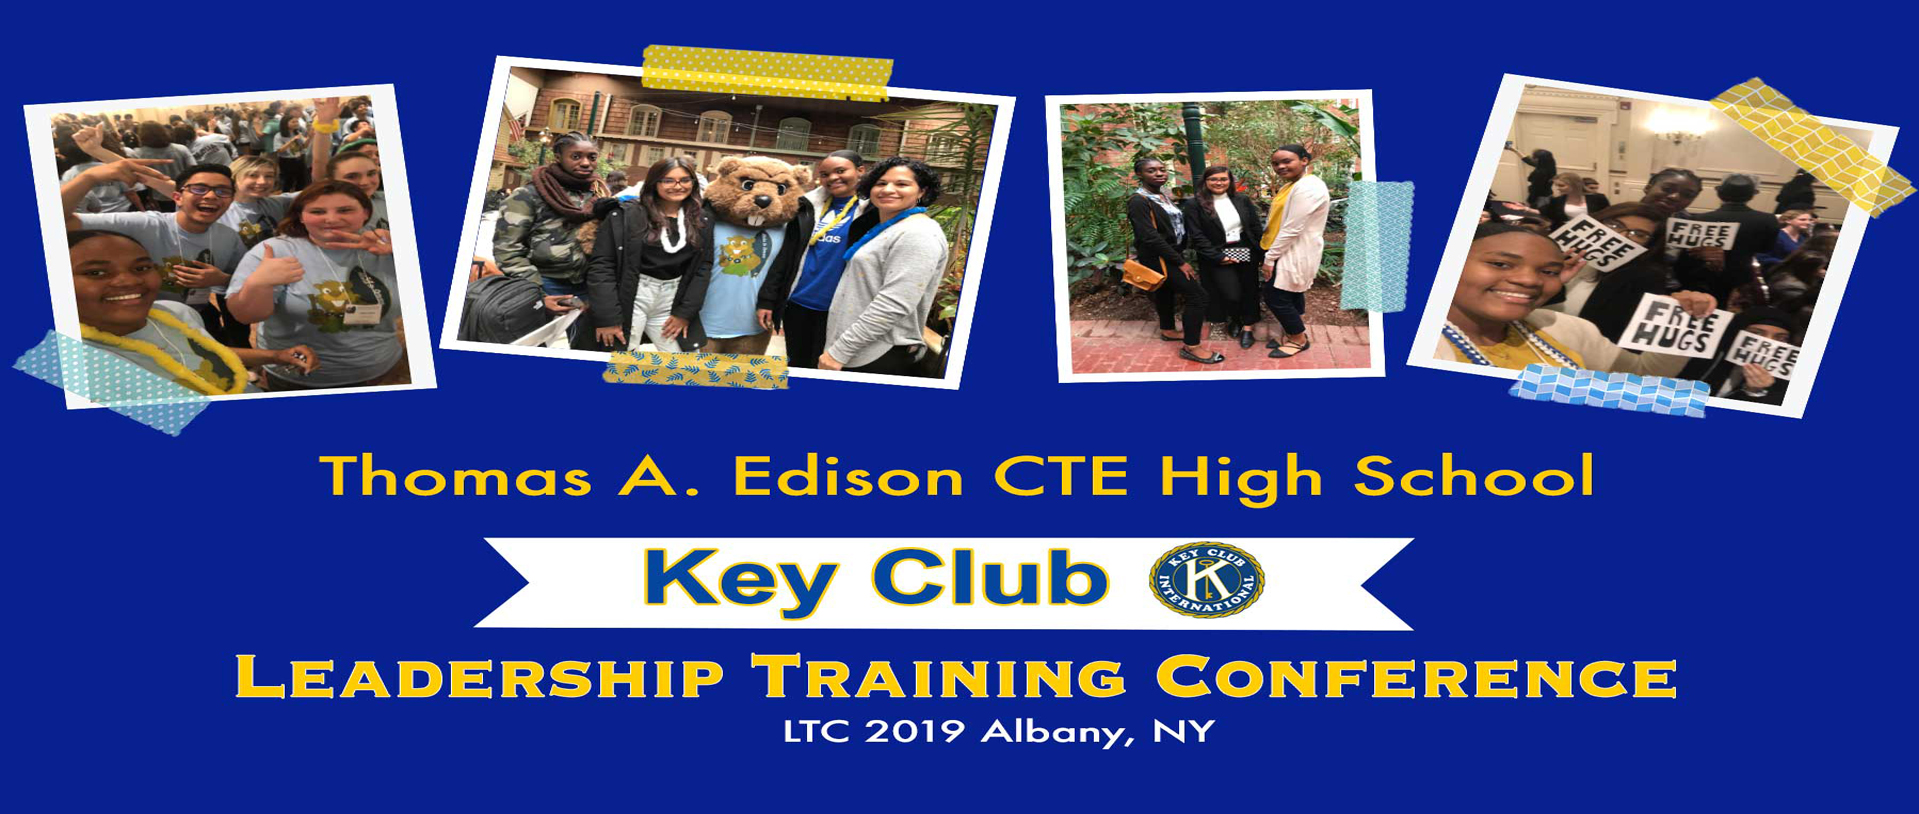 Key Club's Leadership Training Conference 2019